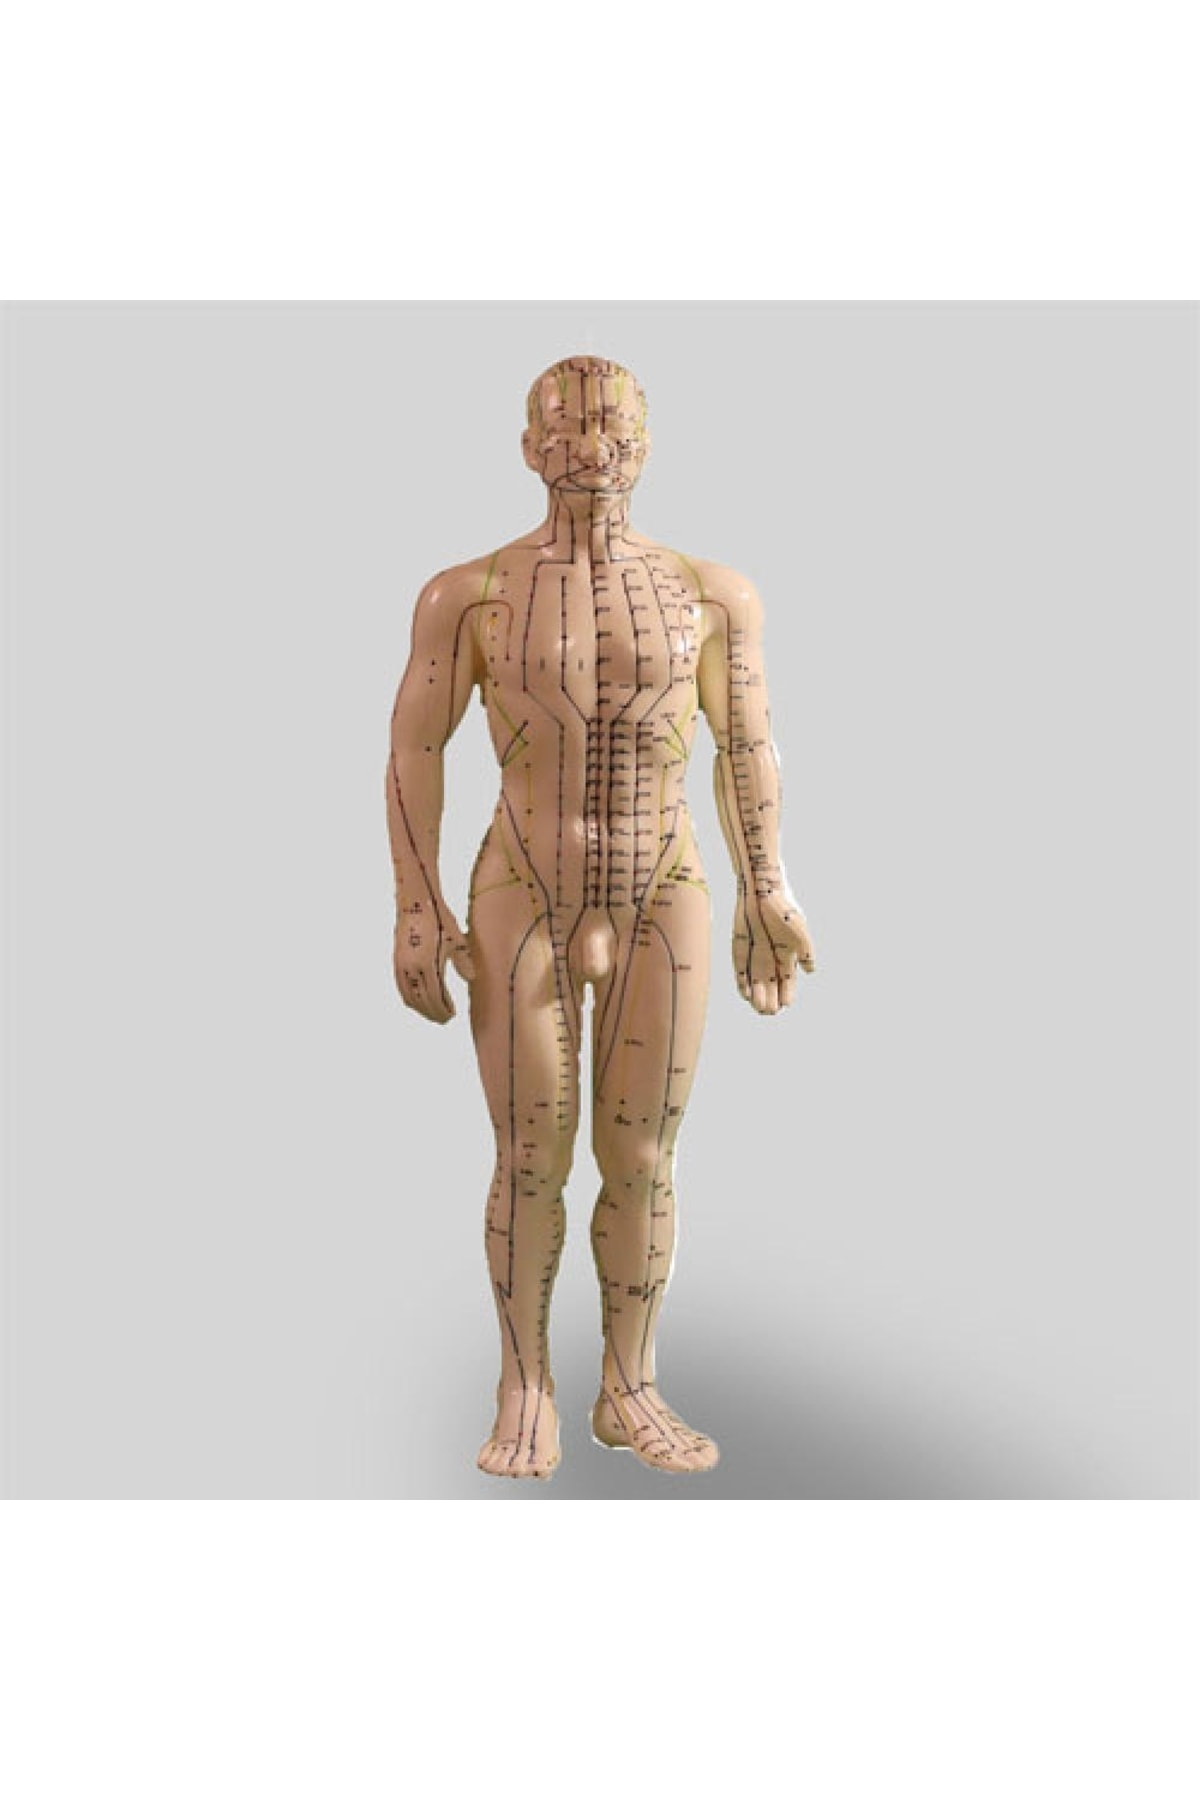 hepsihesaplı Akupunktur Insan Modeli Tam Boy 50 Cm